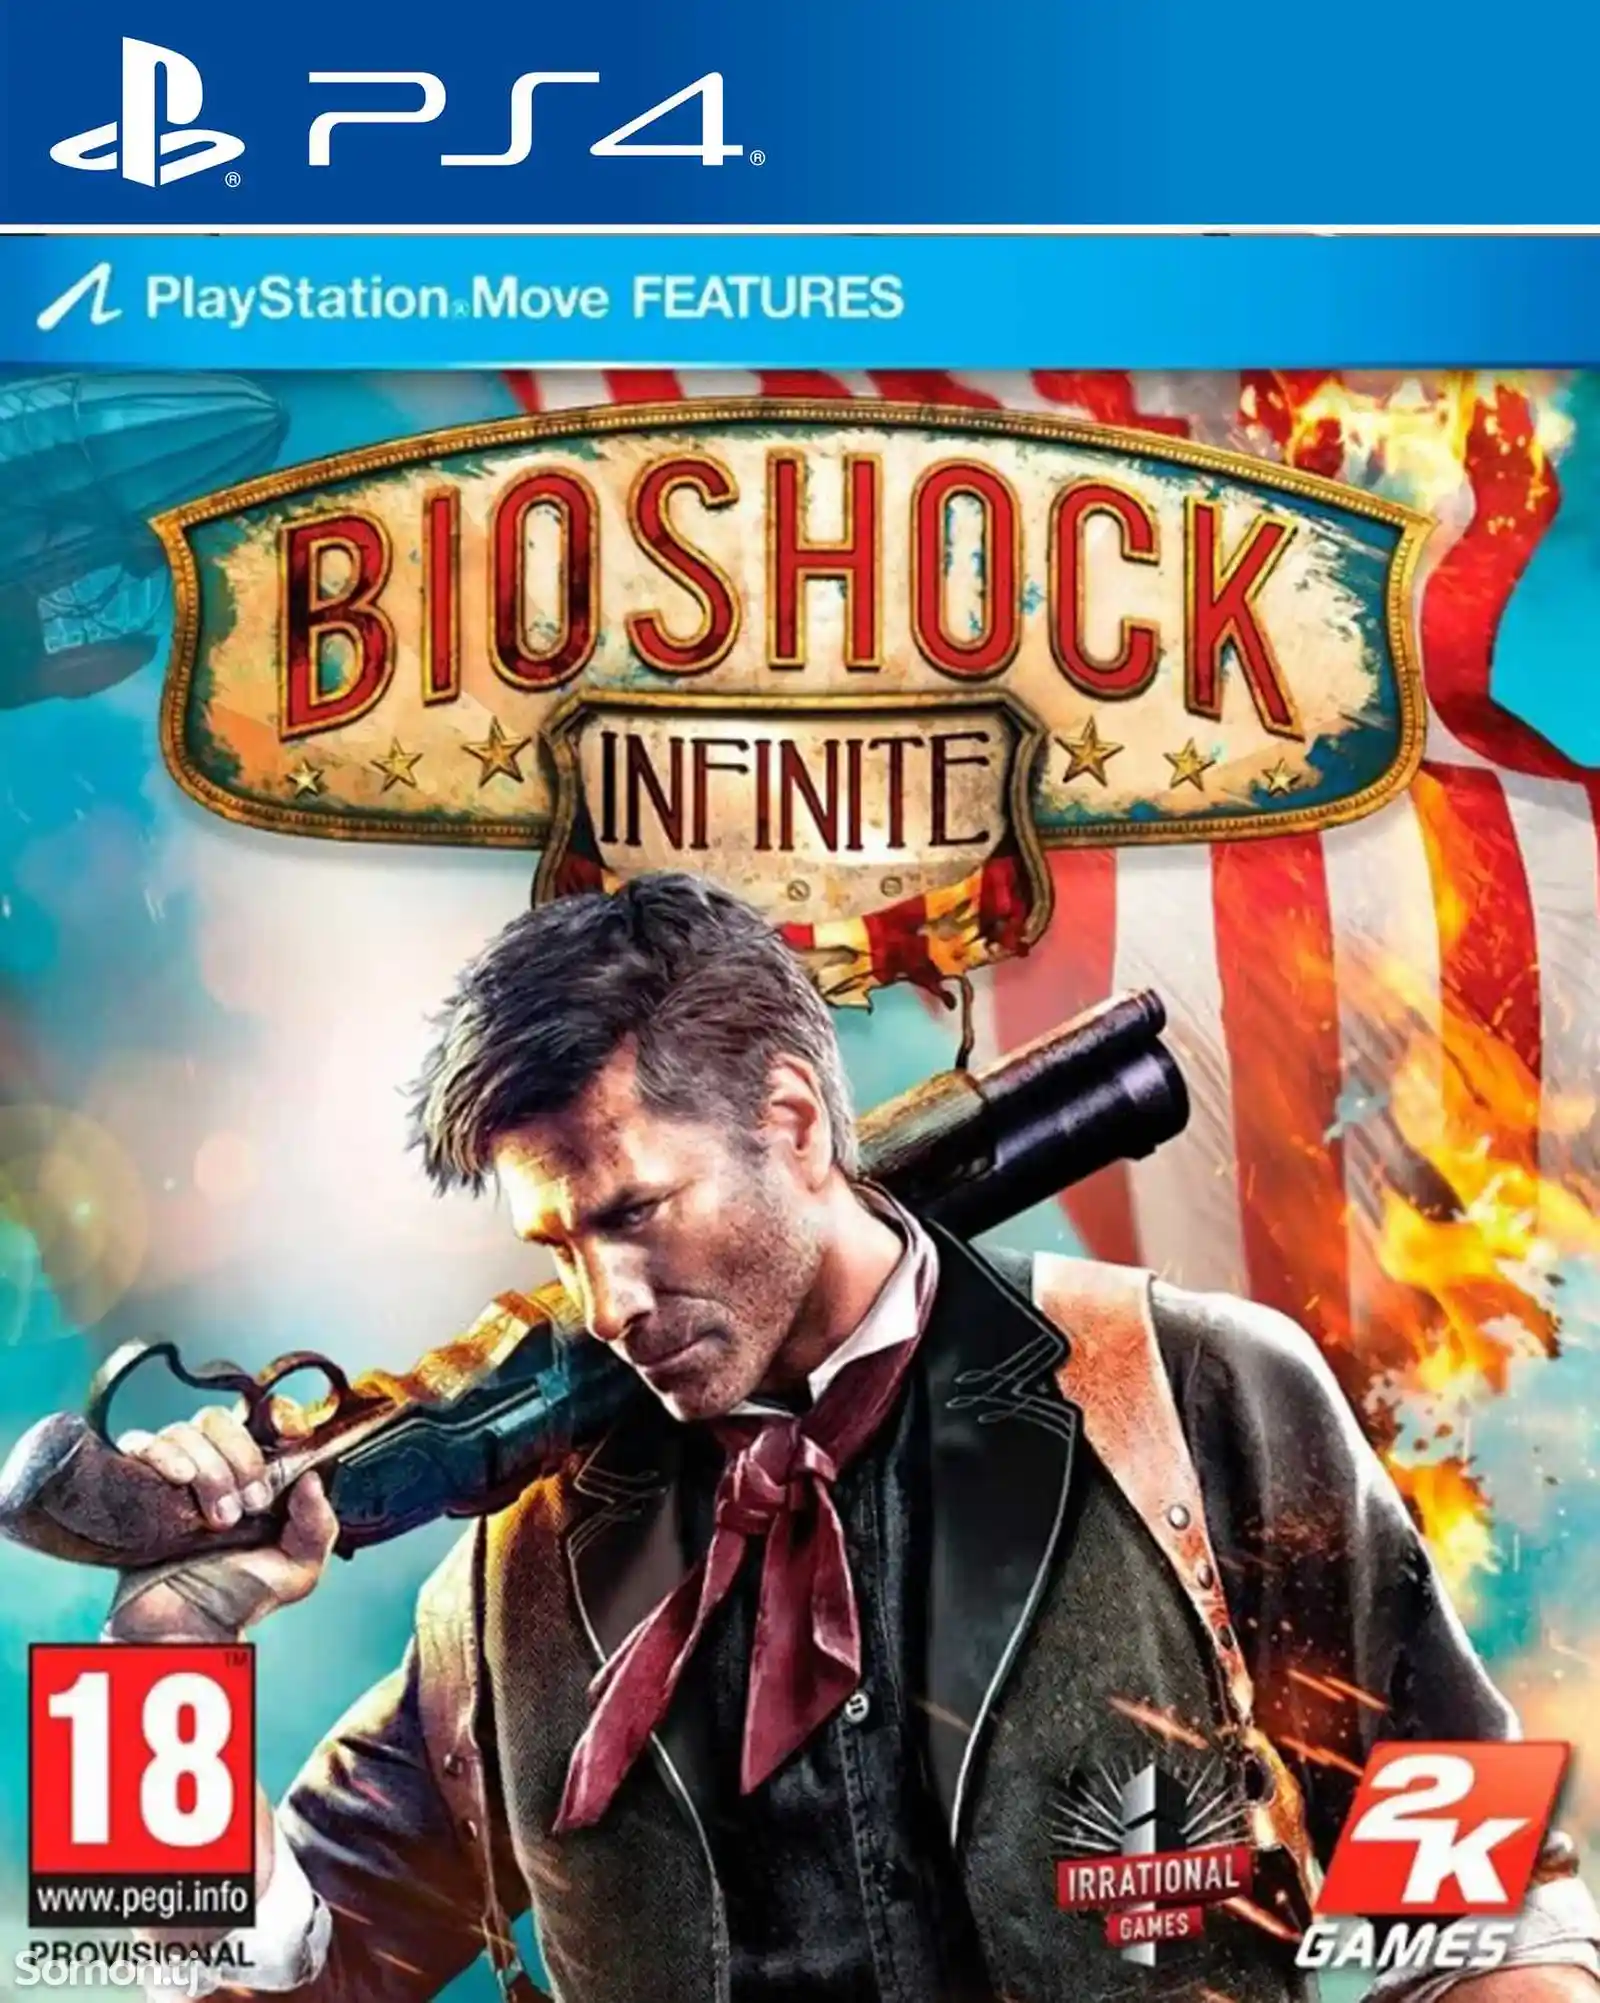 Игра Bioshock infinite для PS-4 / 5.05 / 6.72 / 7.02 / 7.55 / 9.00 /-1